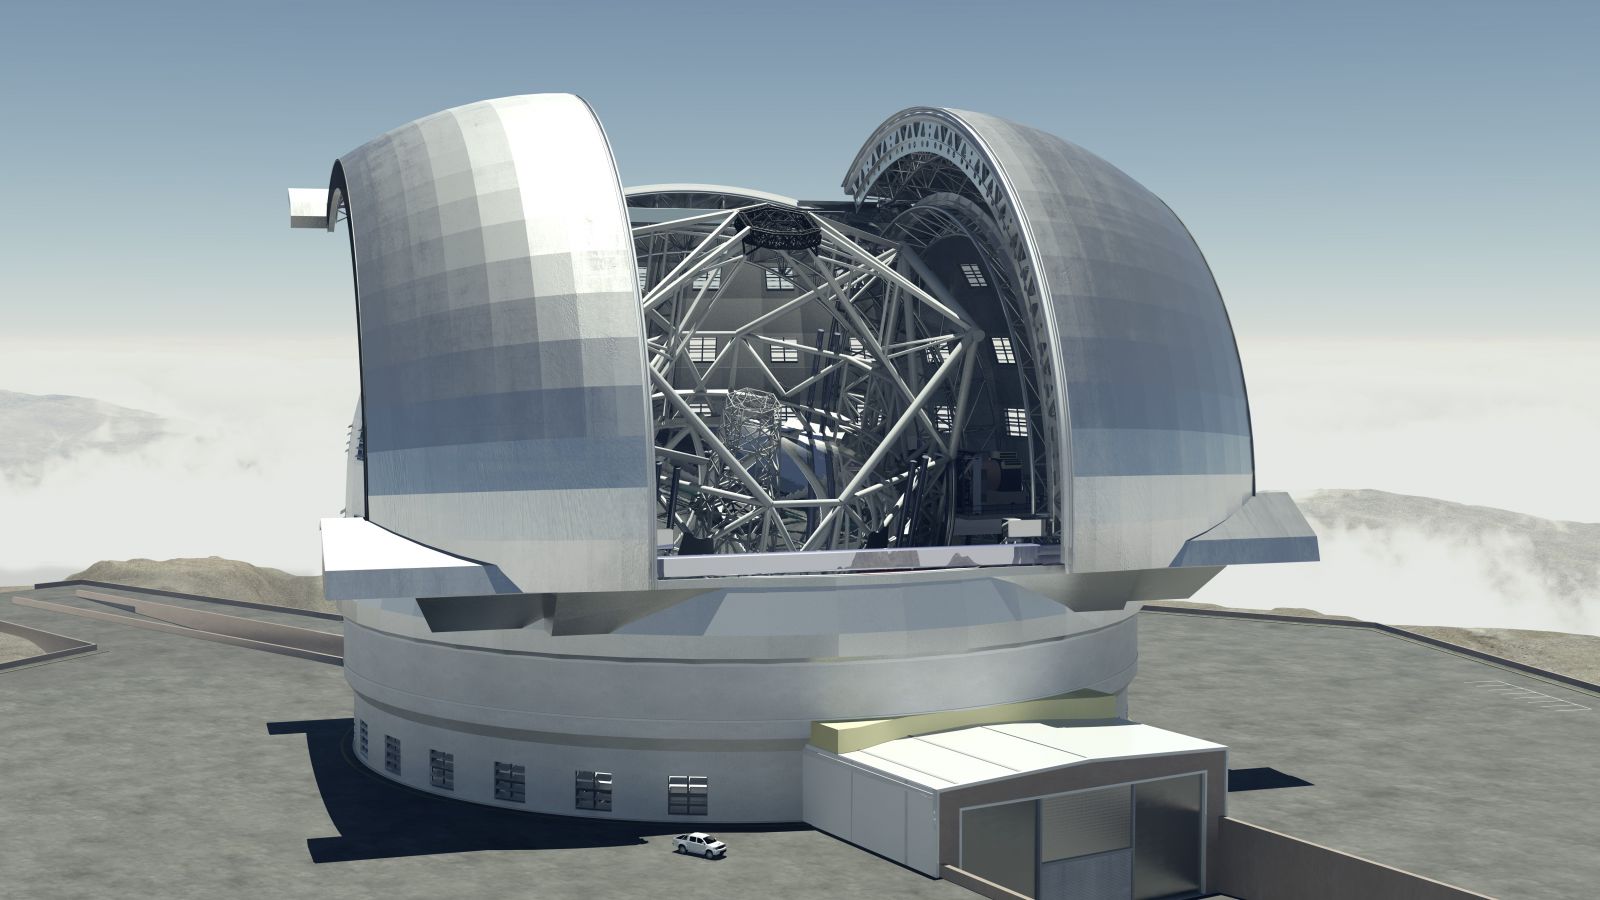 The extremely large telescope